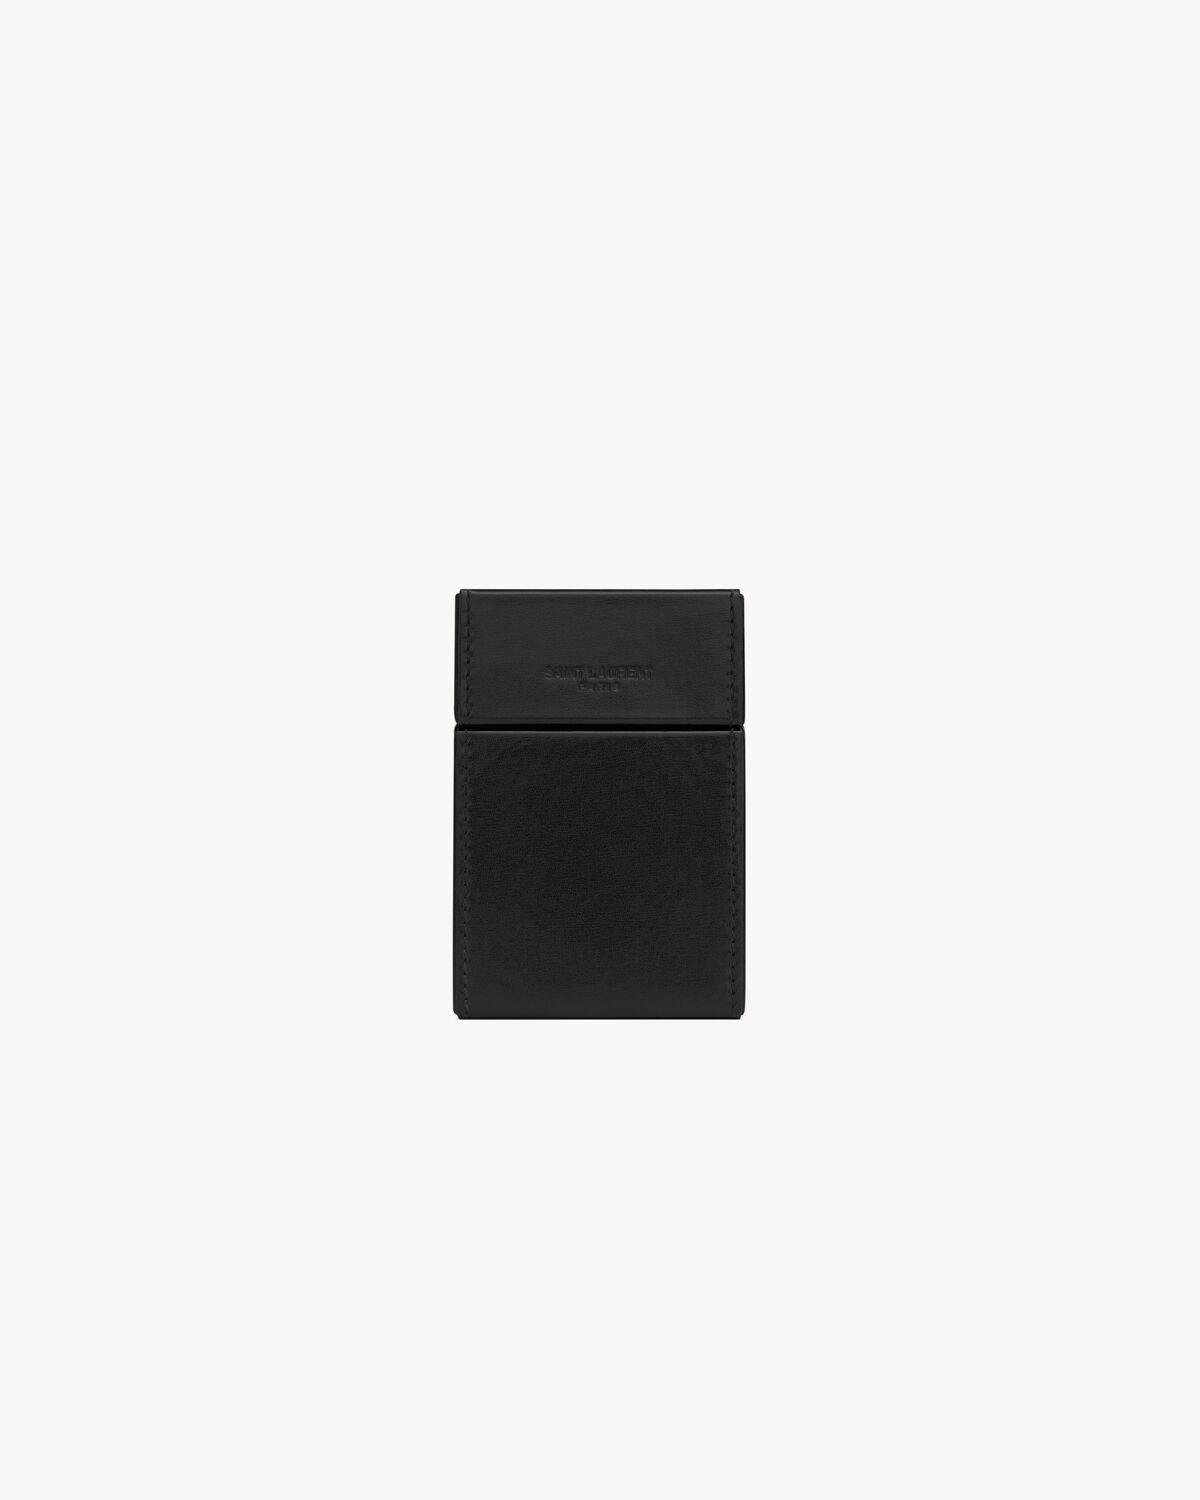 SAINT LAURENT PARIS cigarette box in smooth leather